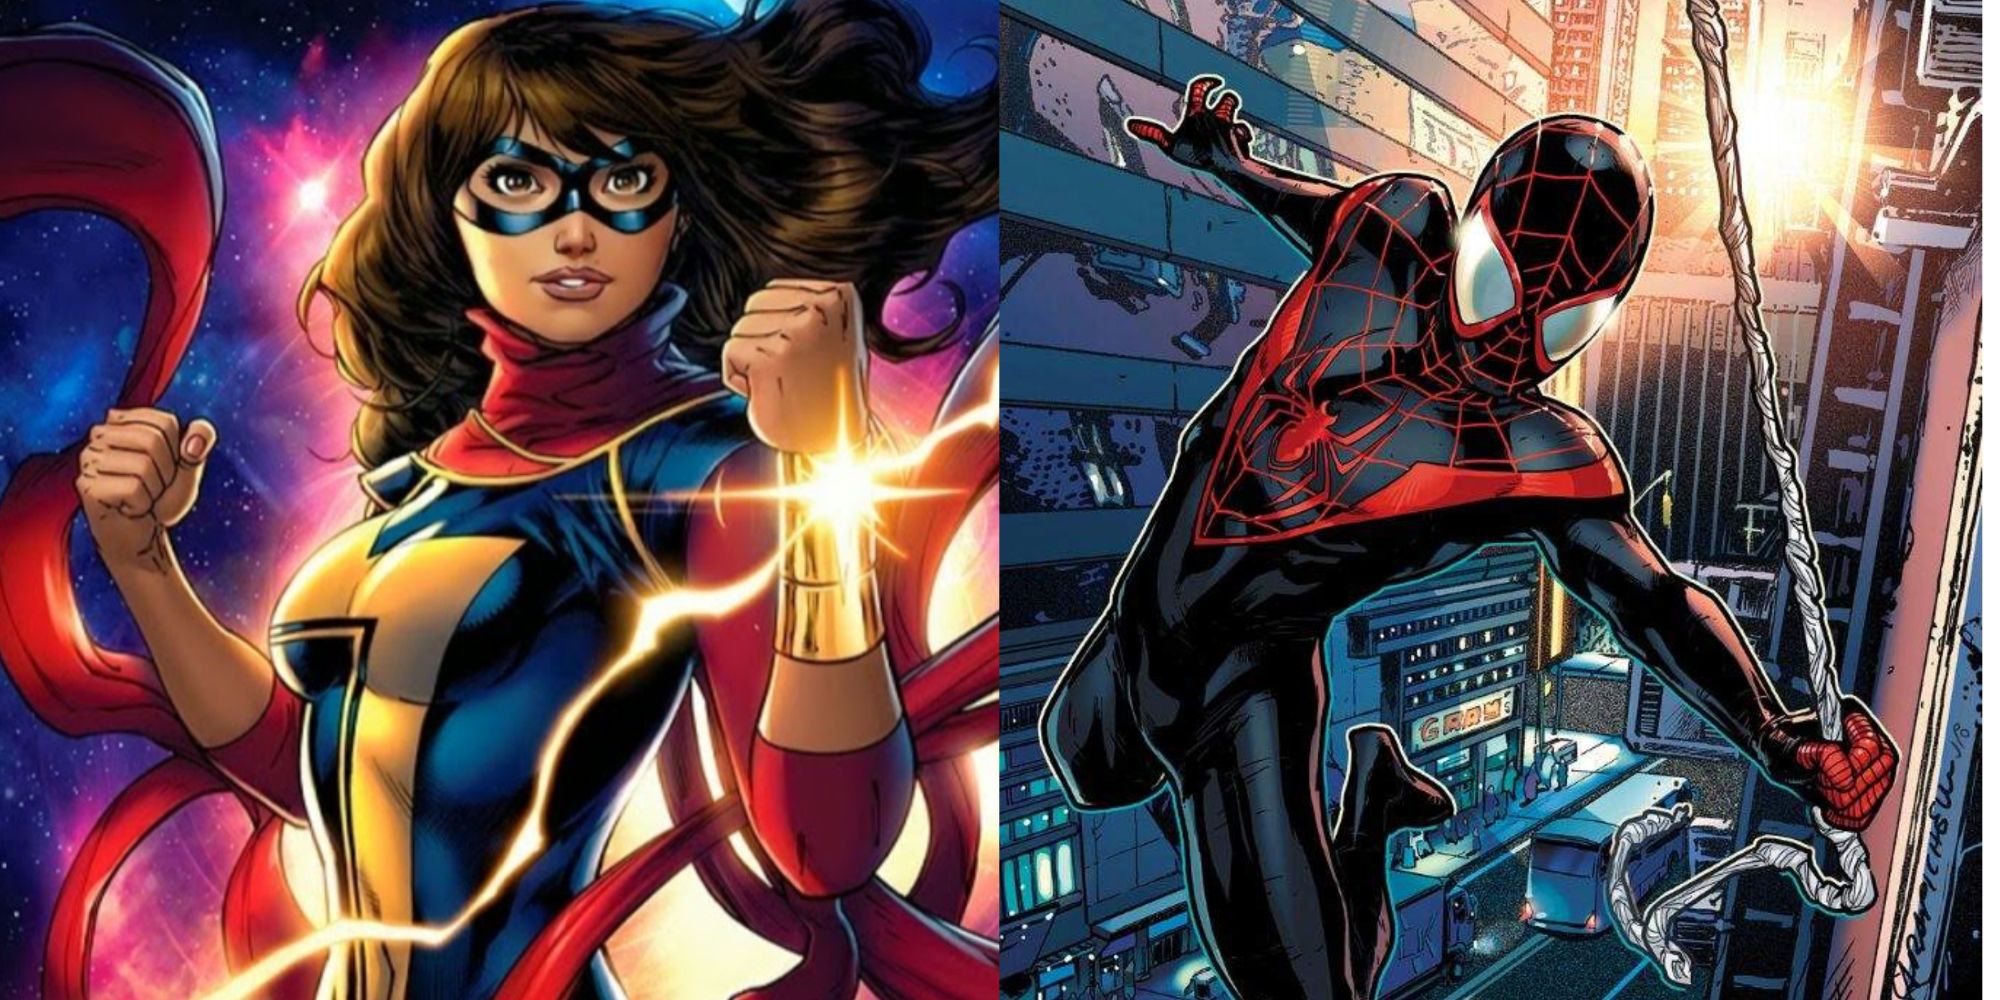 A split image of Ms. Marvel (Kamala Khan) and Spider-Man (Miles Morales) from Marvel Comics